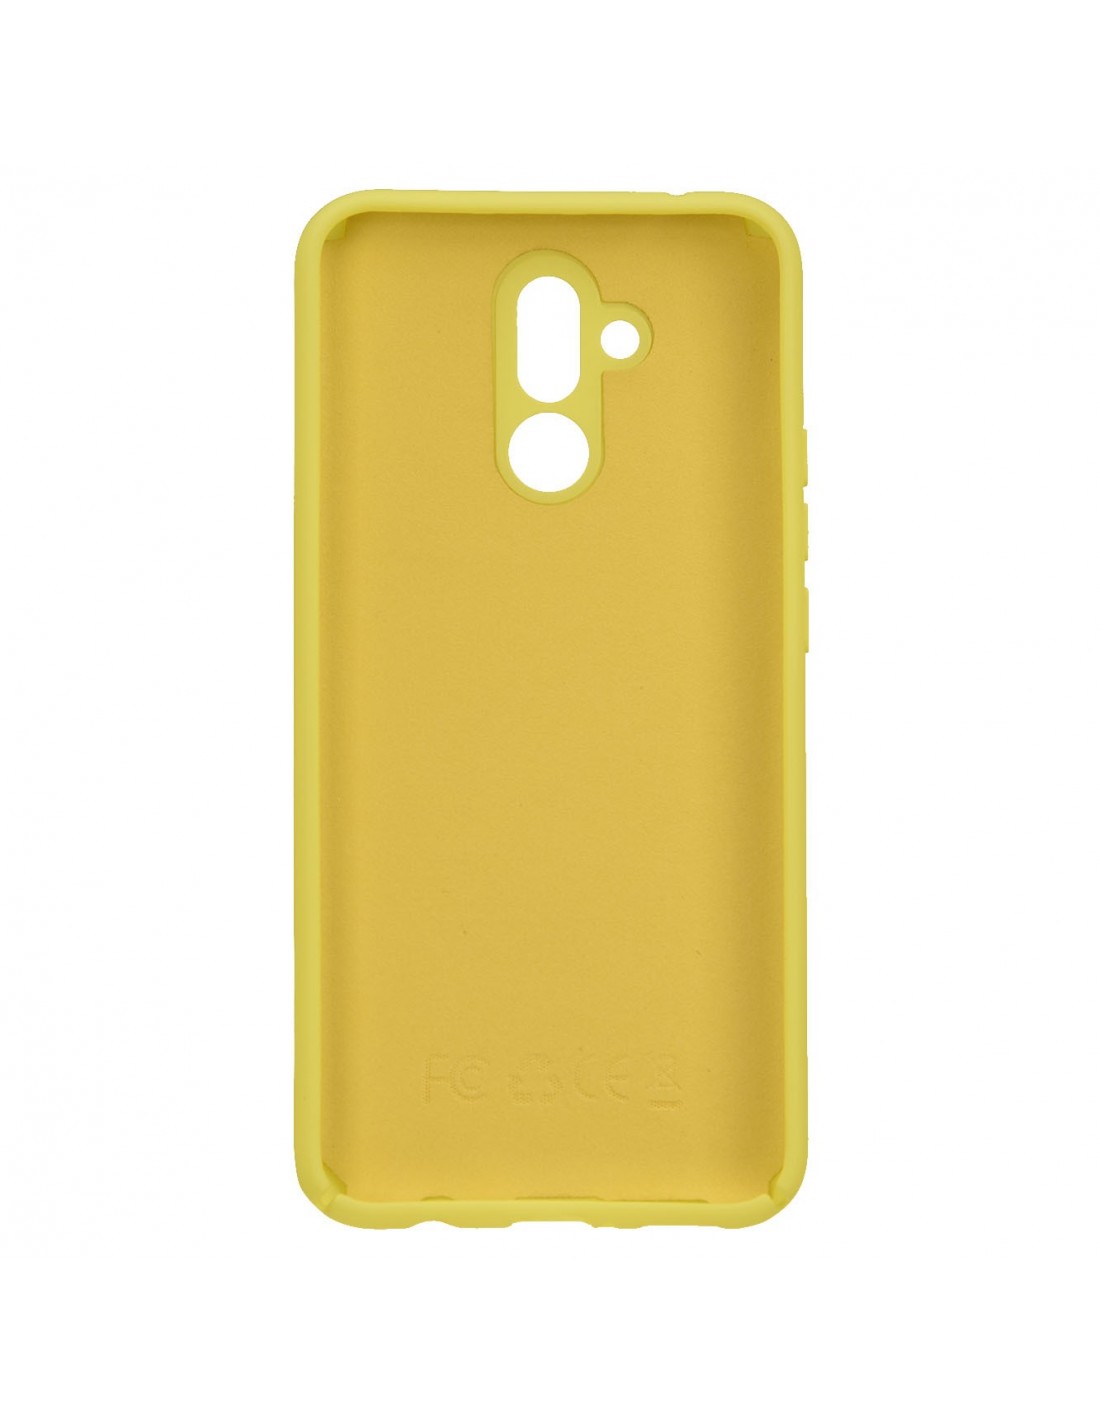 Costoso Torpe periscopio Funda Carcasa silicona alta calidad amarilla Huawei Mate 20 Lite